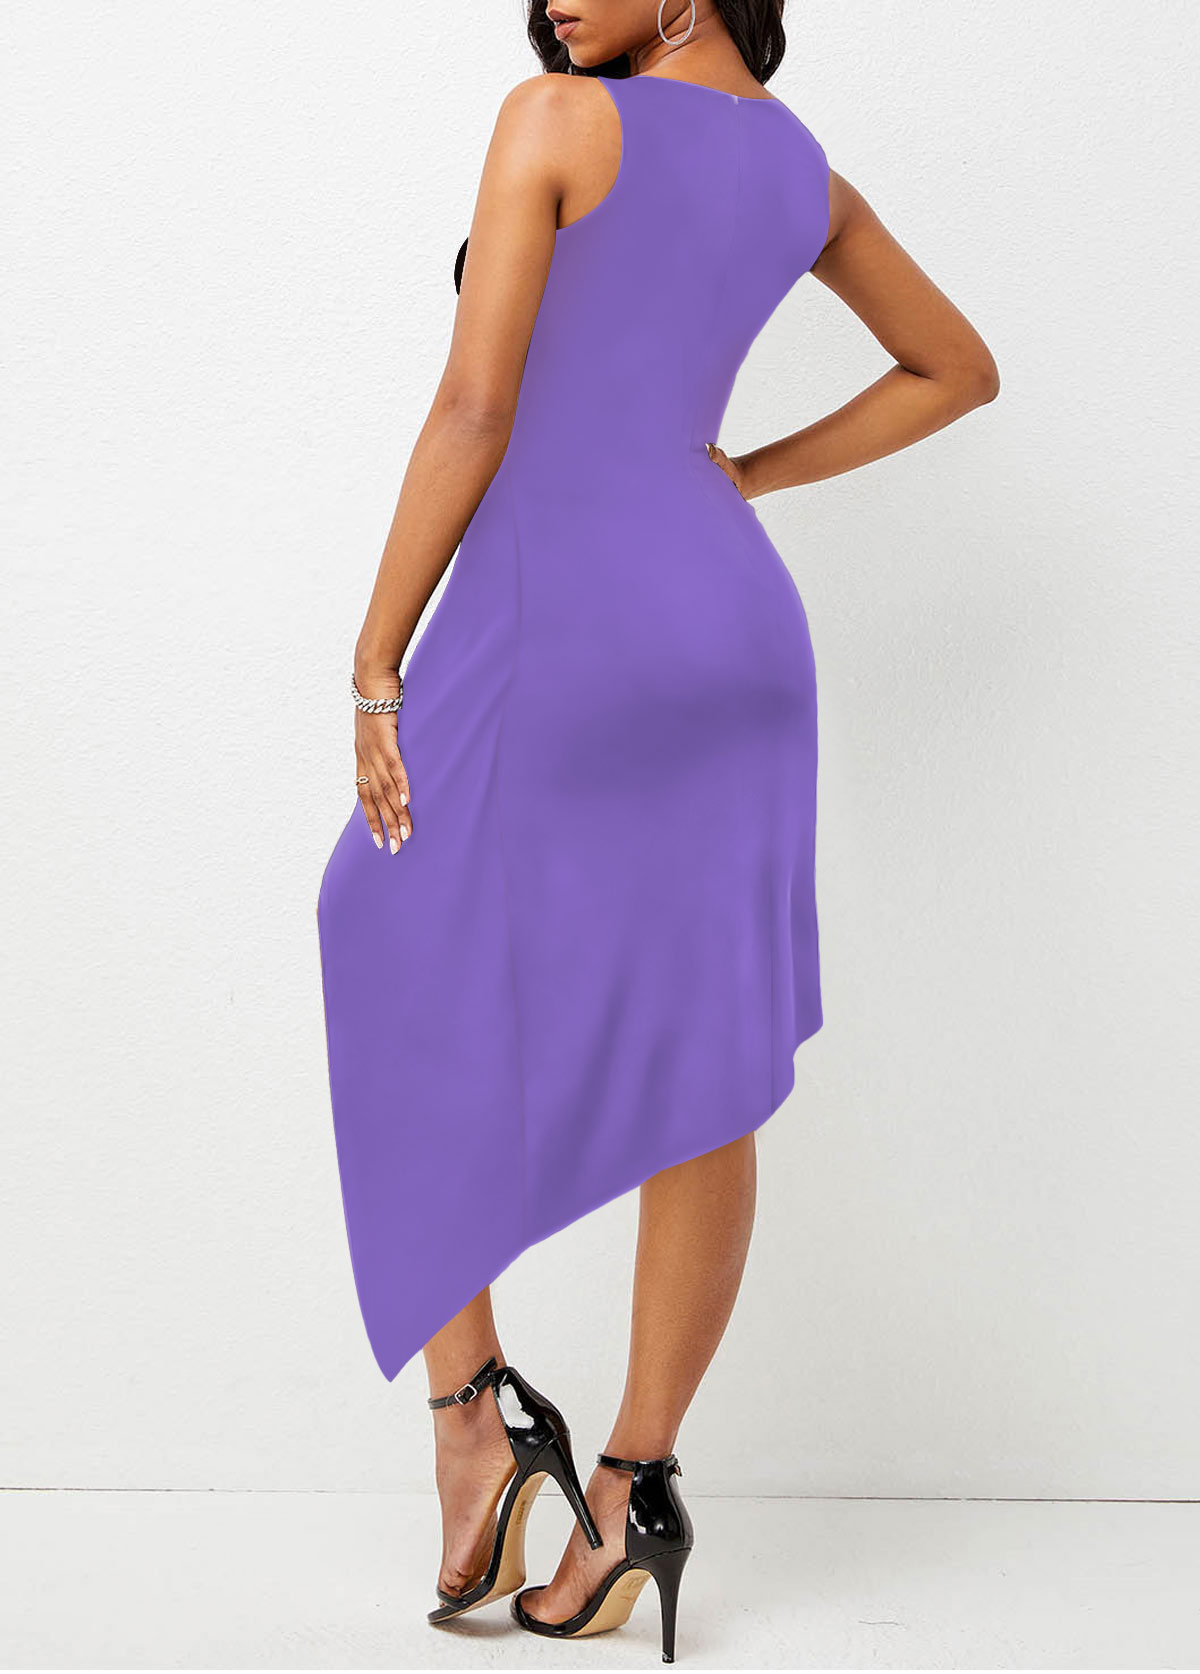 Floral Print Twist Purple Round Neck Bodycon Dress